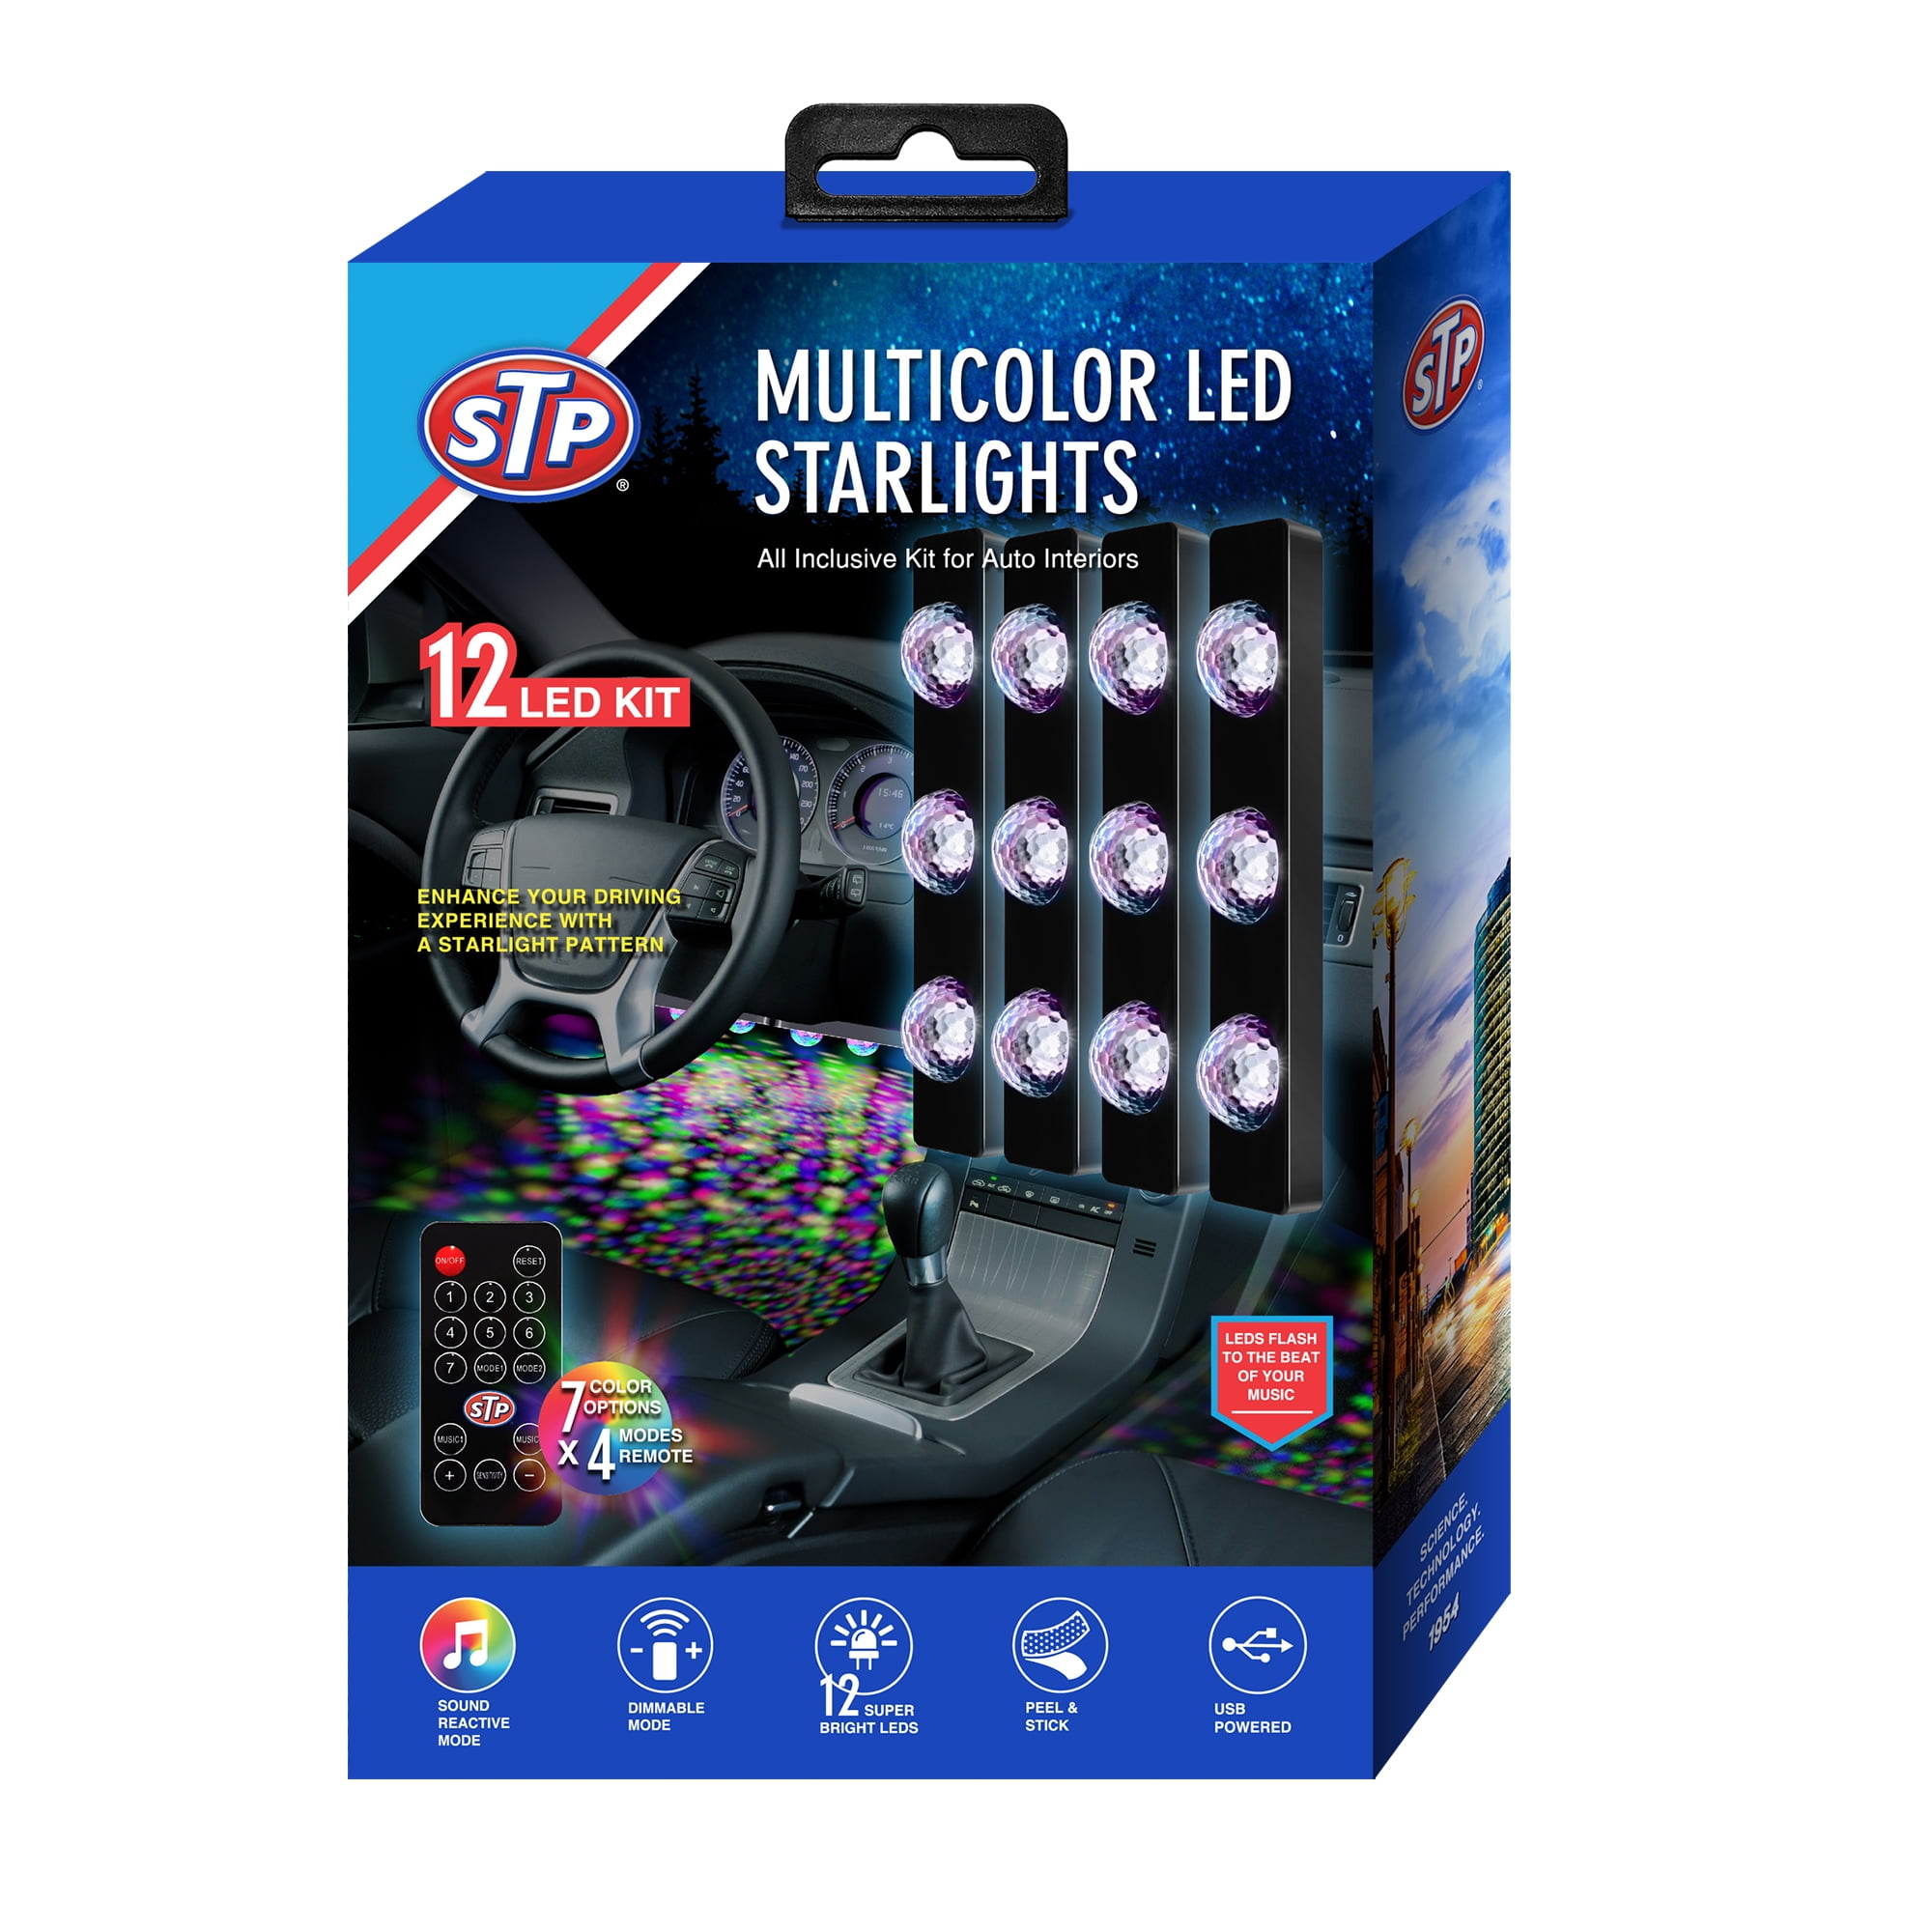 STP Multicolor Car Interior LED Starlight Kit, Customizable,  Sound-Reactive, 4-Pack